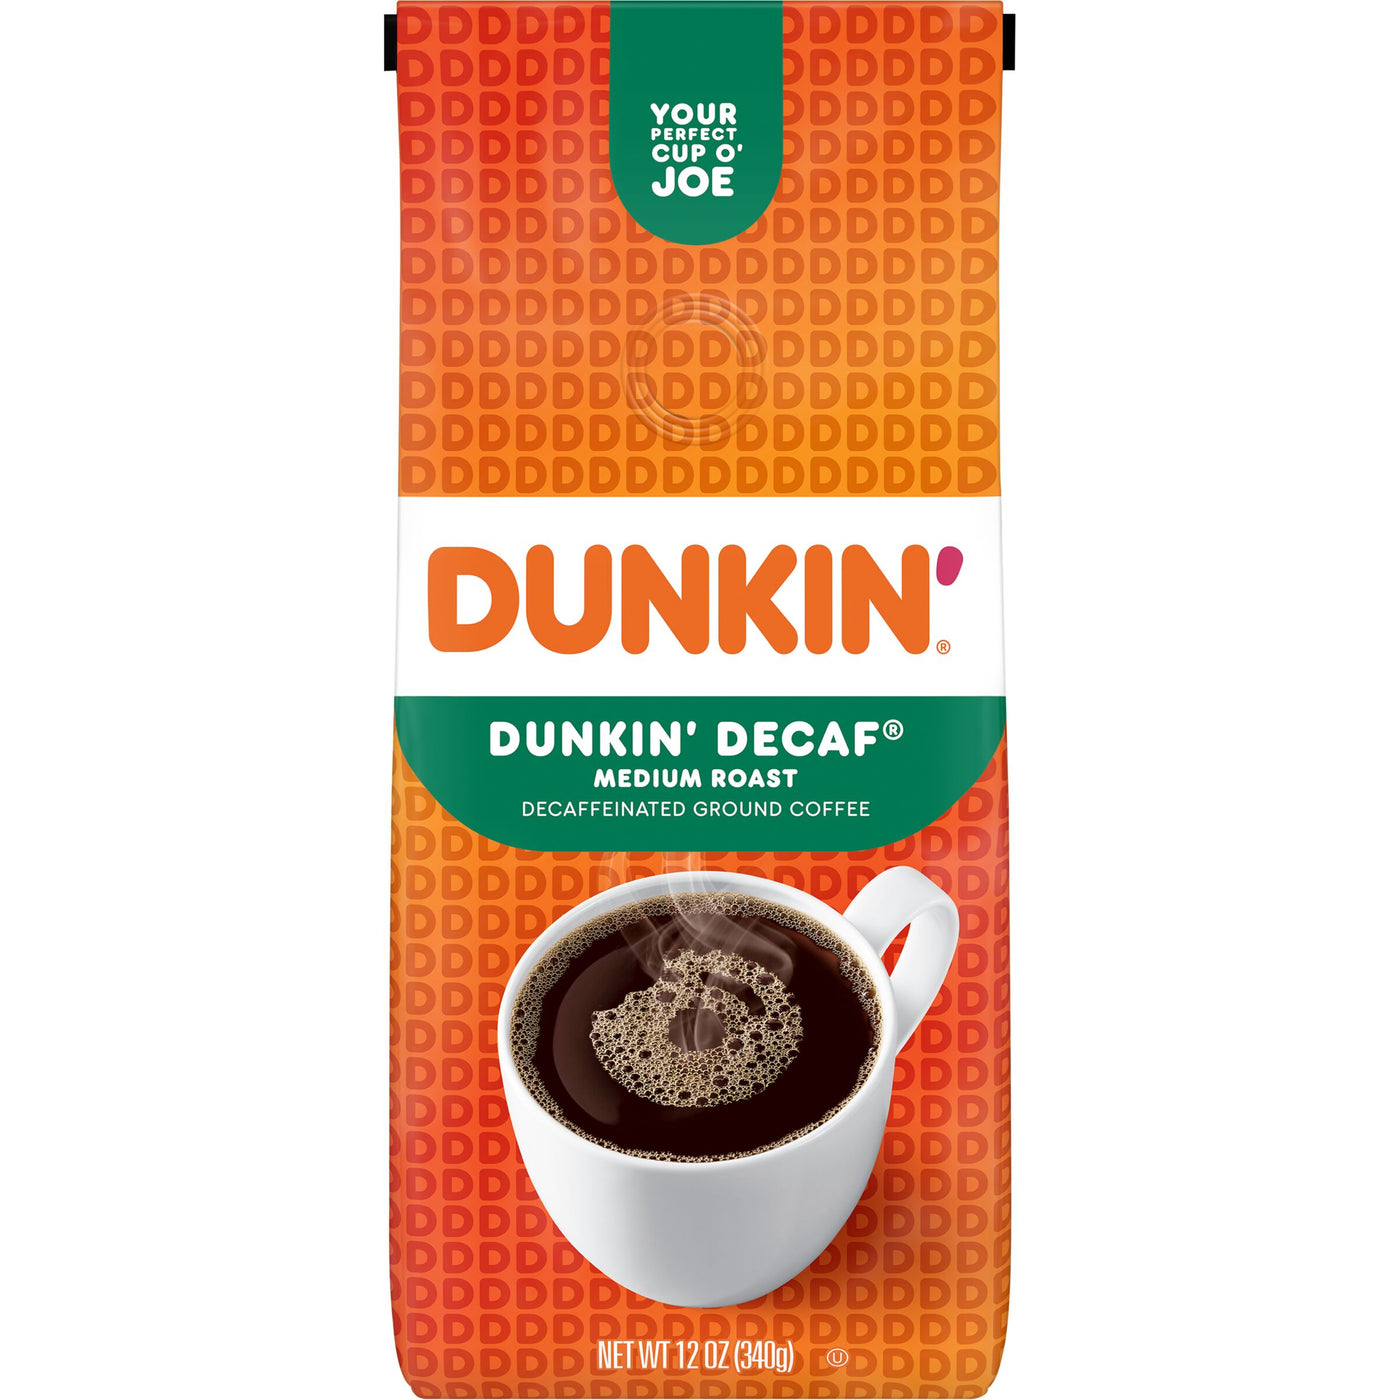 Dunkin' Decaf Medium Roast, Ground Coffee